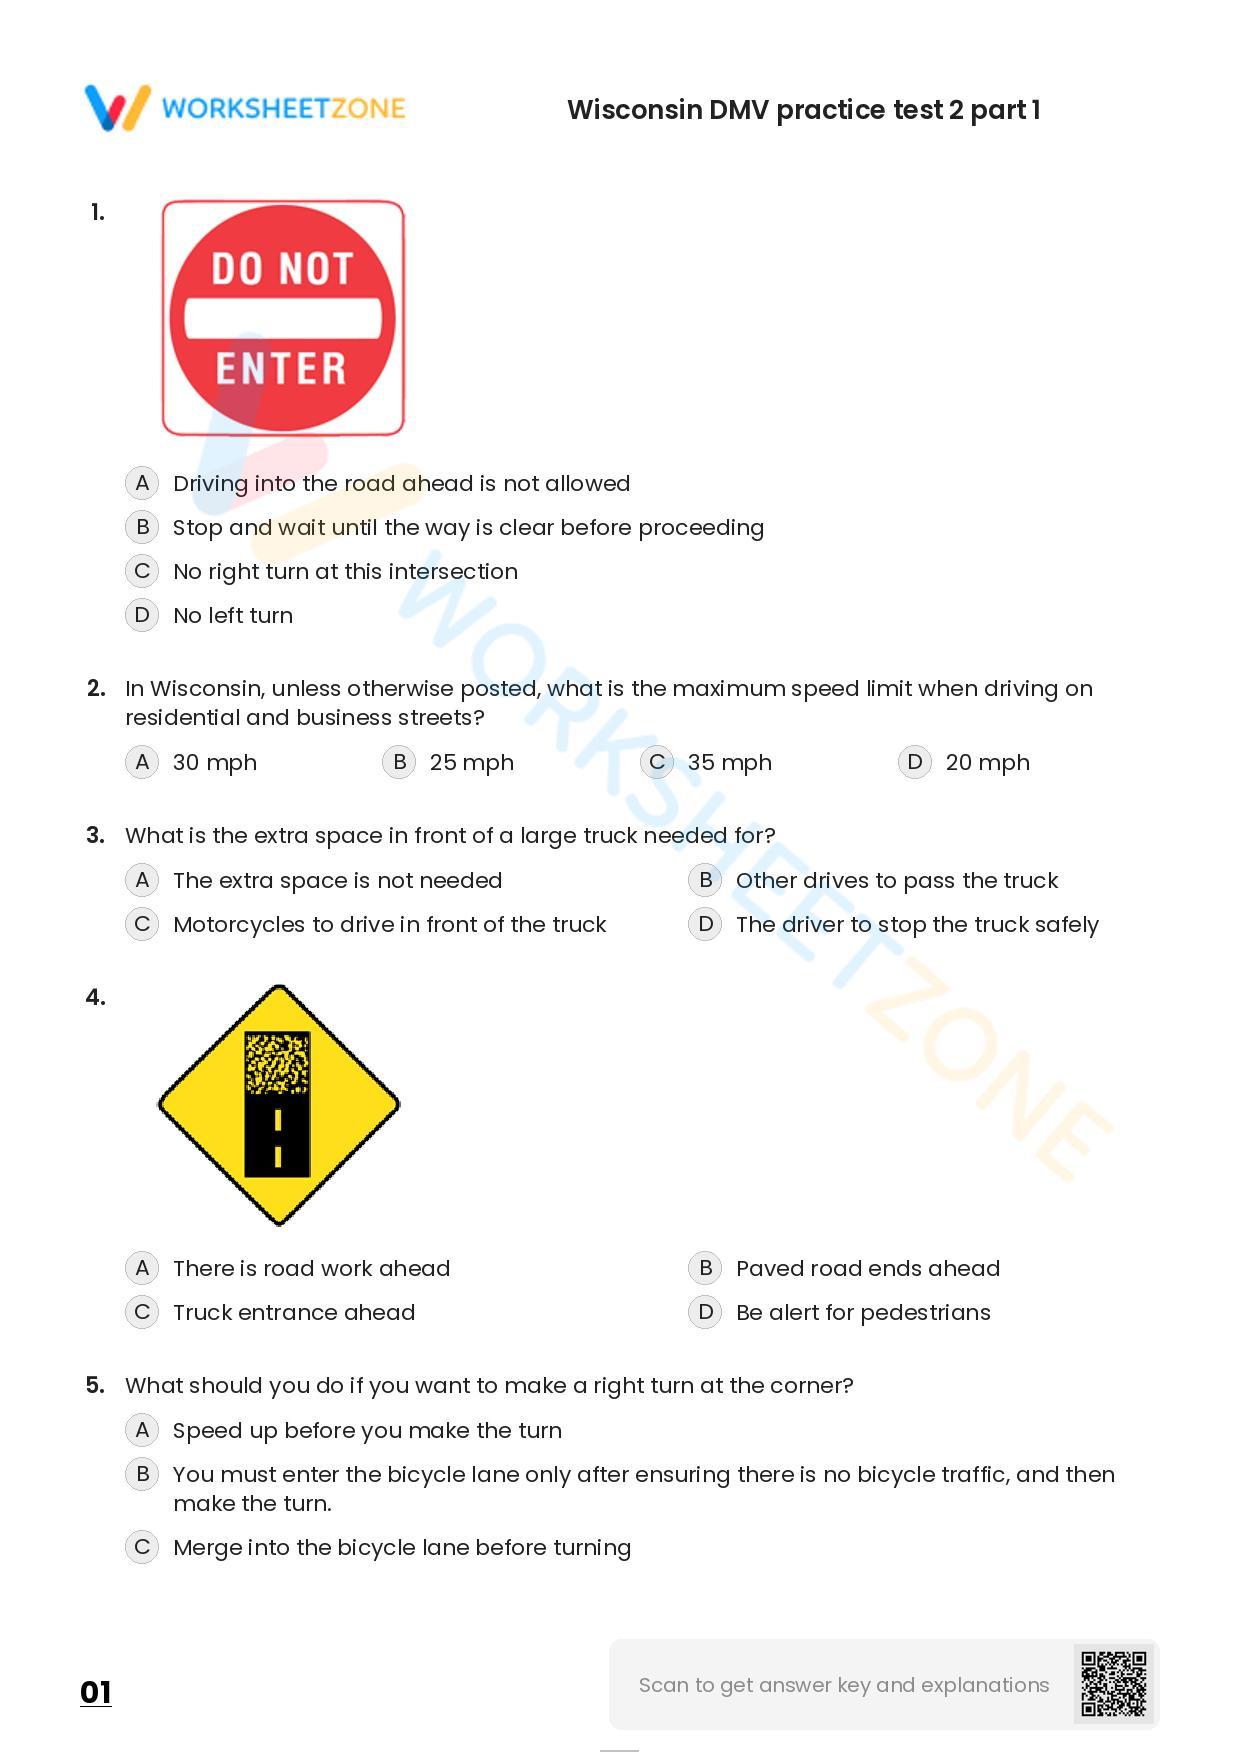 Free Printable Wisconsin DMV Practice Test 2 Part 1 Worksheet